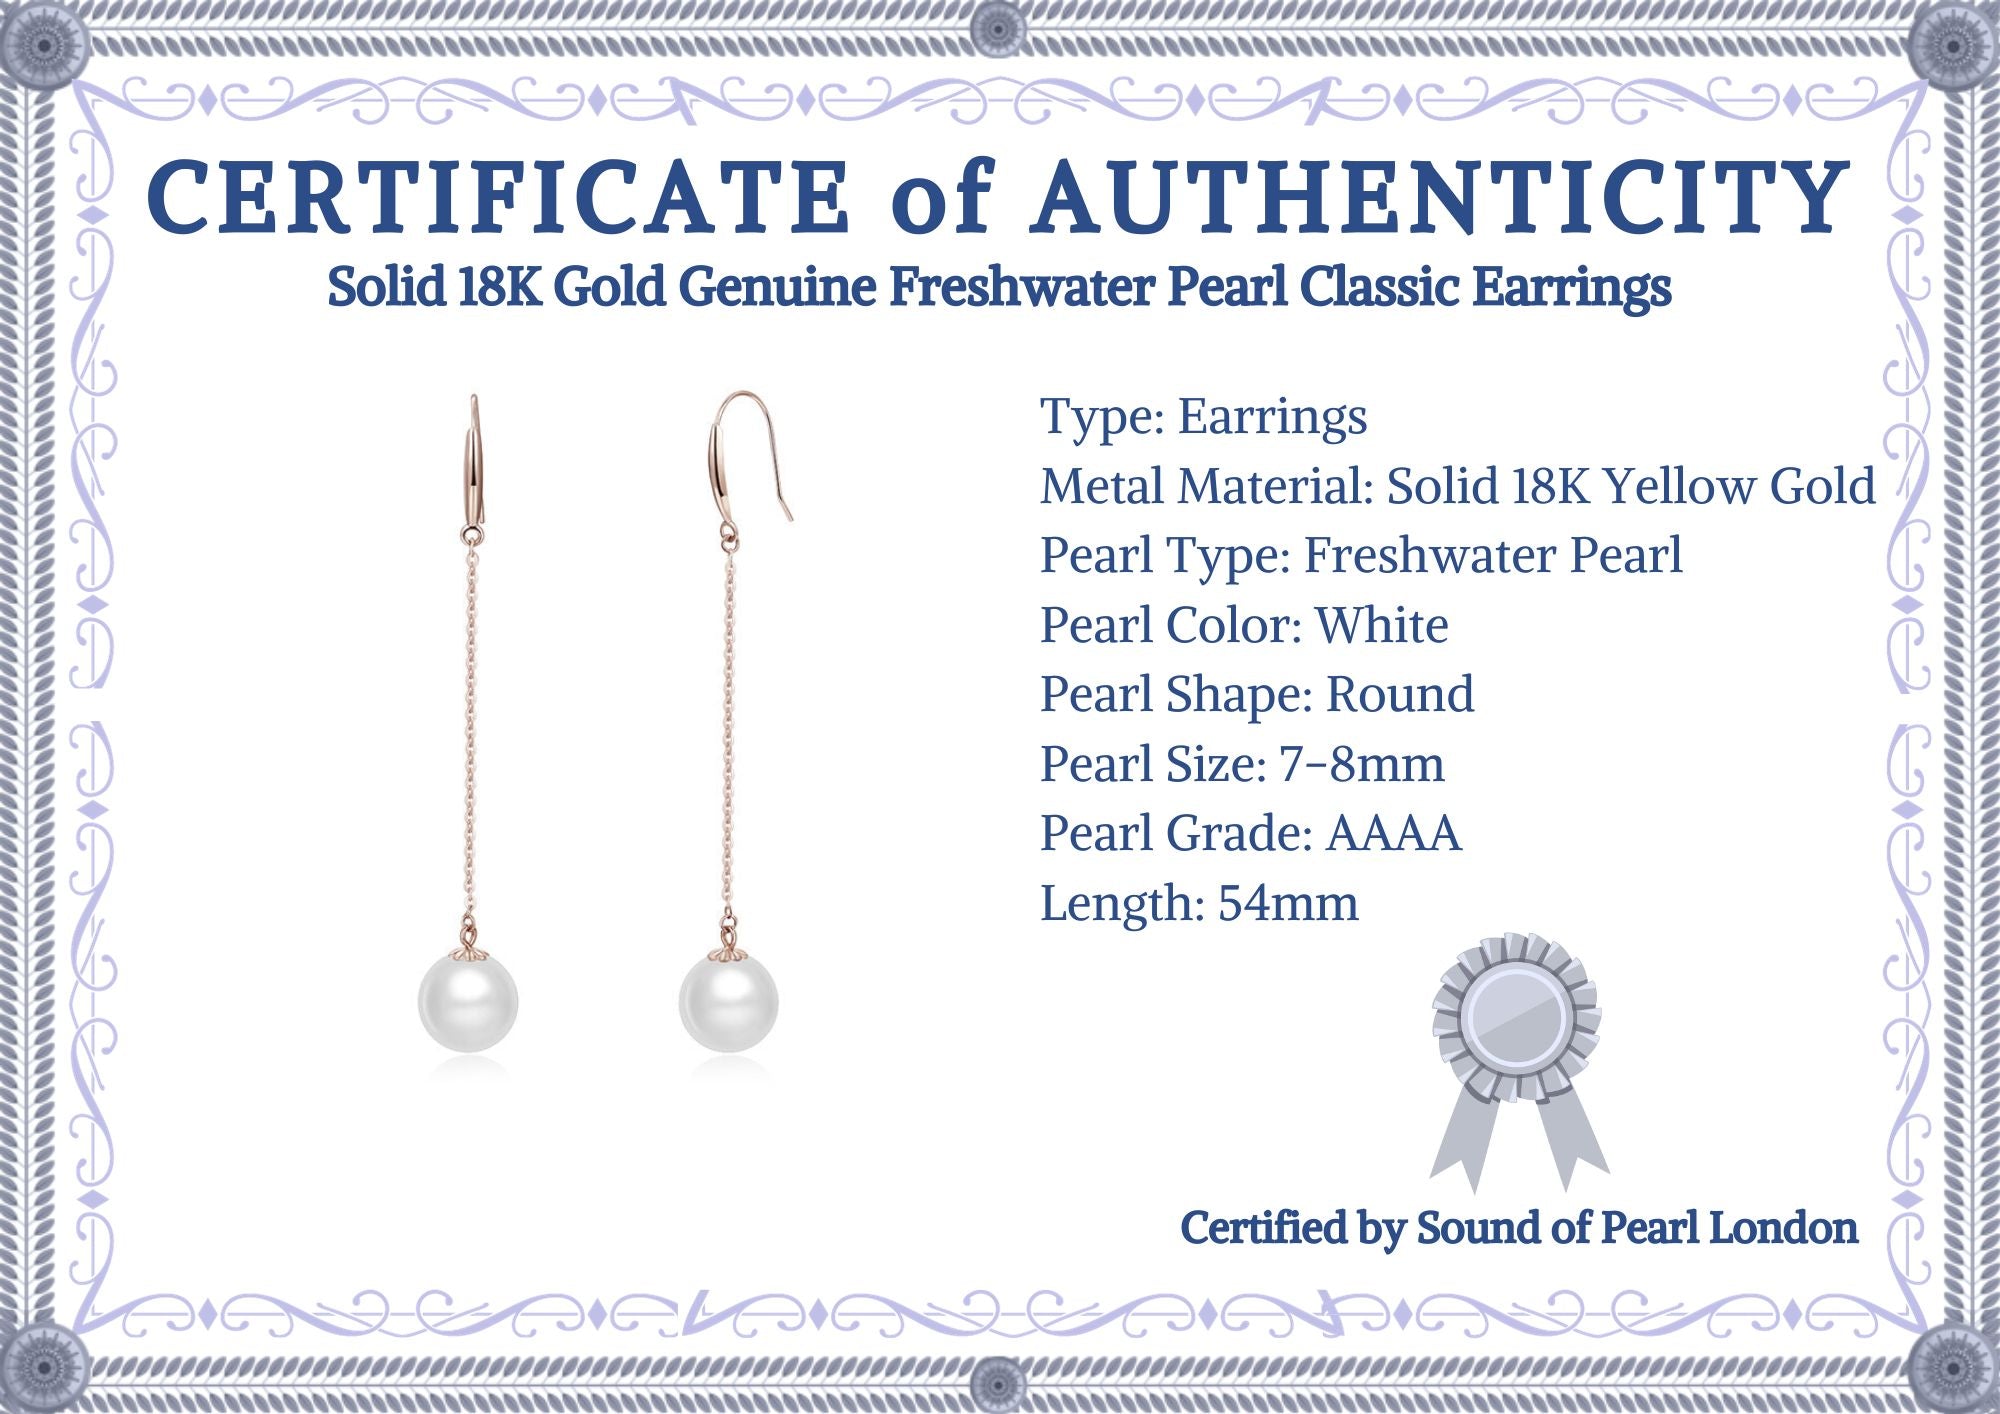 Solid 18K Gold Genuine Freshwater Pearl Classic Earrings